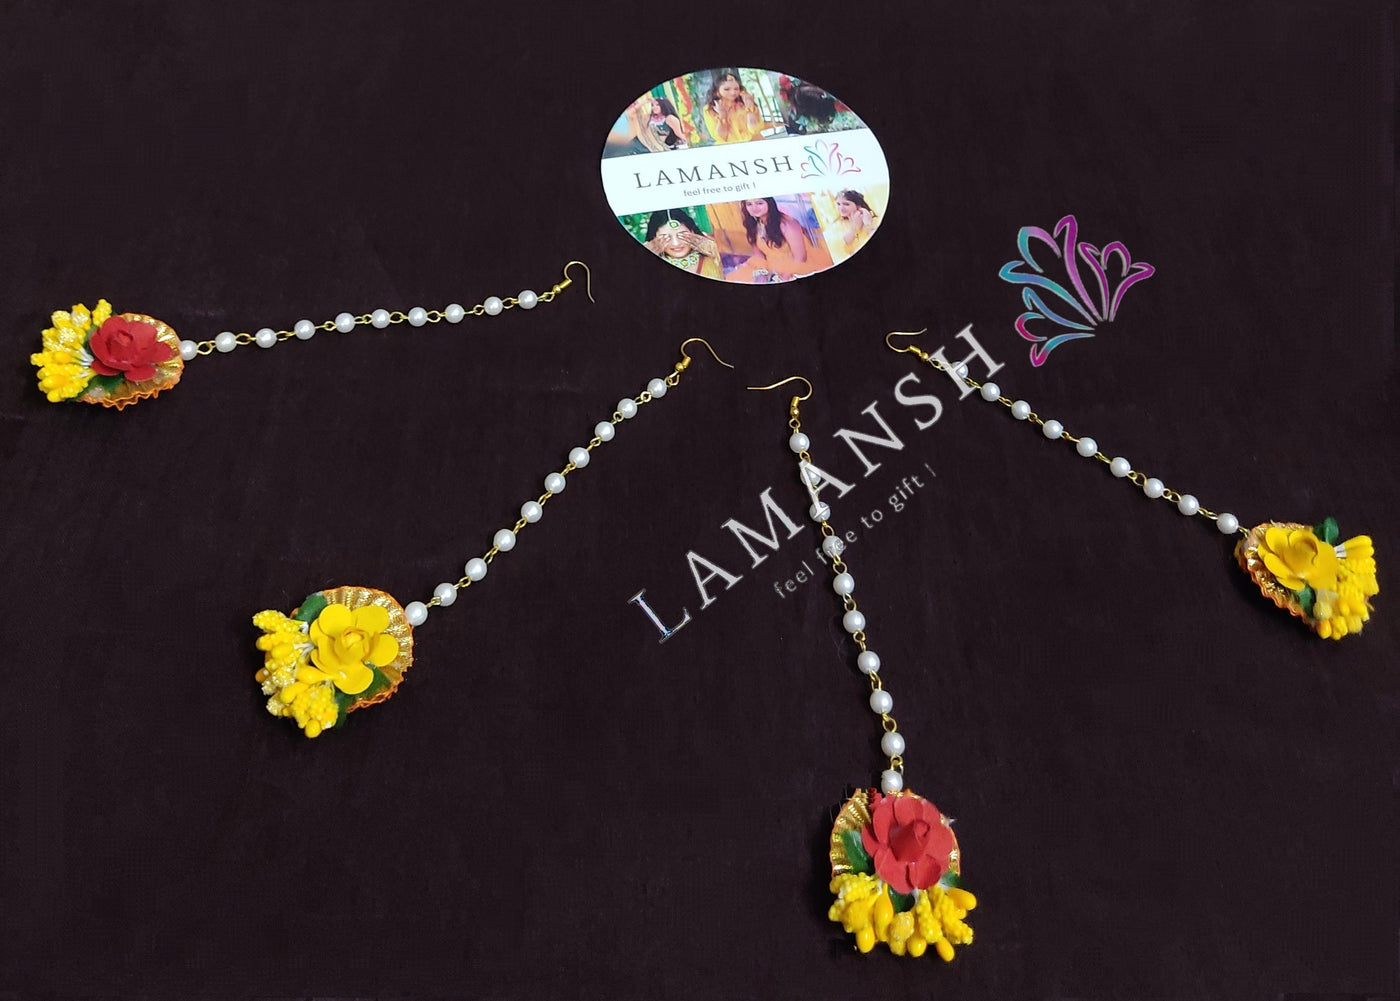 LAMANSH Floral 🌺 maangtika Assorted colors / Set of 100 Maangtika's LAMANSH® ( Set of 100) at just 20 each / Artificial 🌺 Flower Maangtika's set / Haldi & Mehendi Favors for bridesmaid